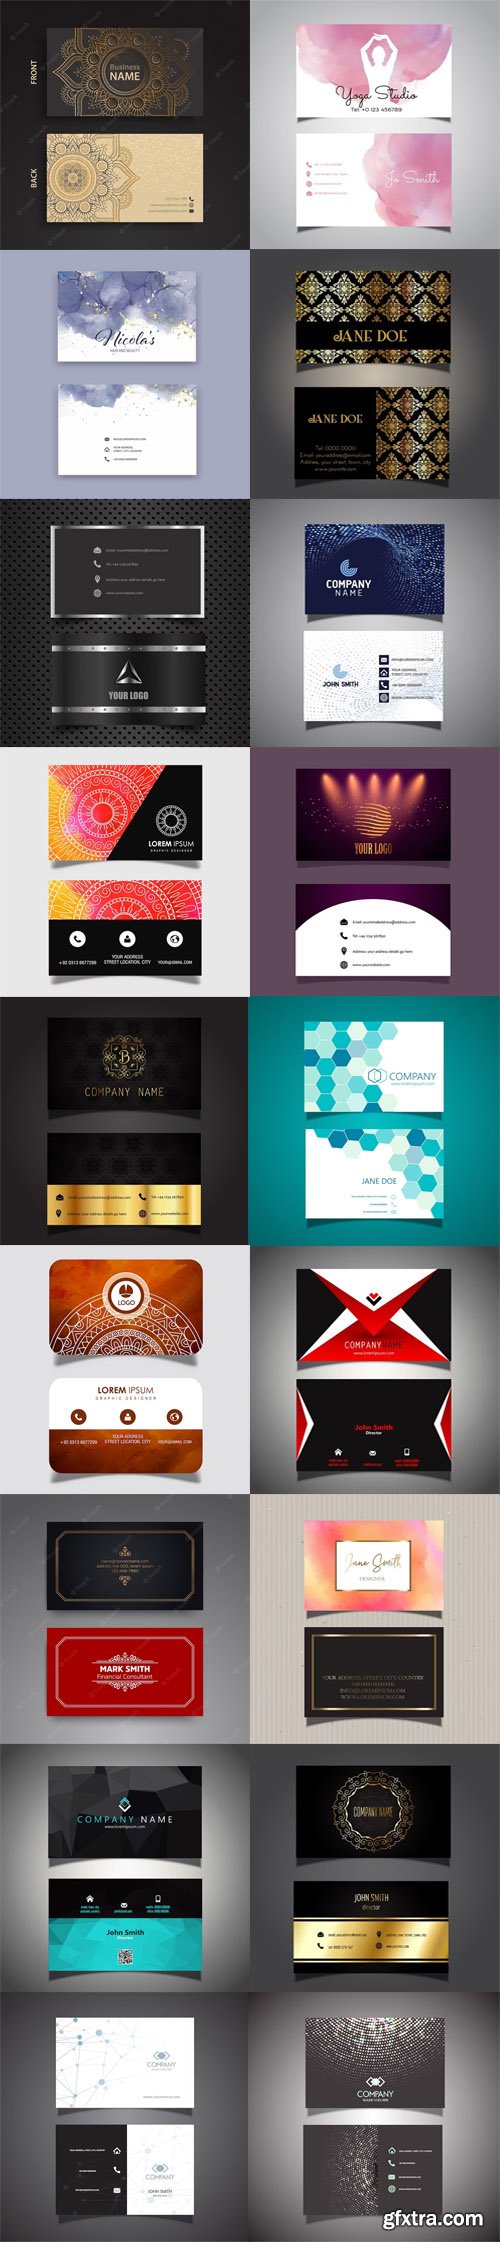 Modern Business Card Collection - 18 Creative Vector Design Templates